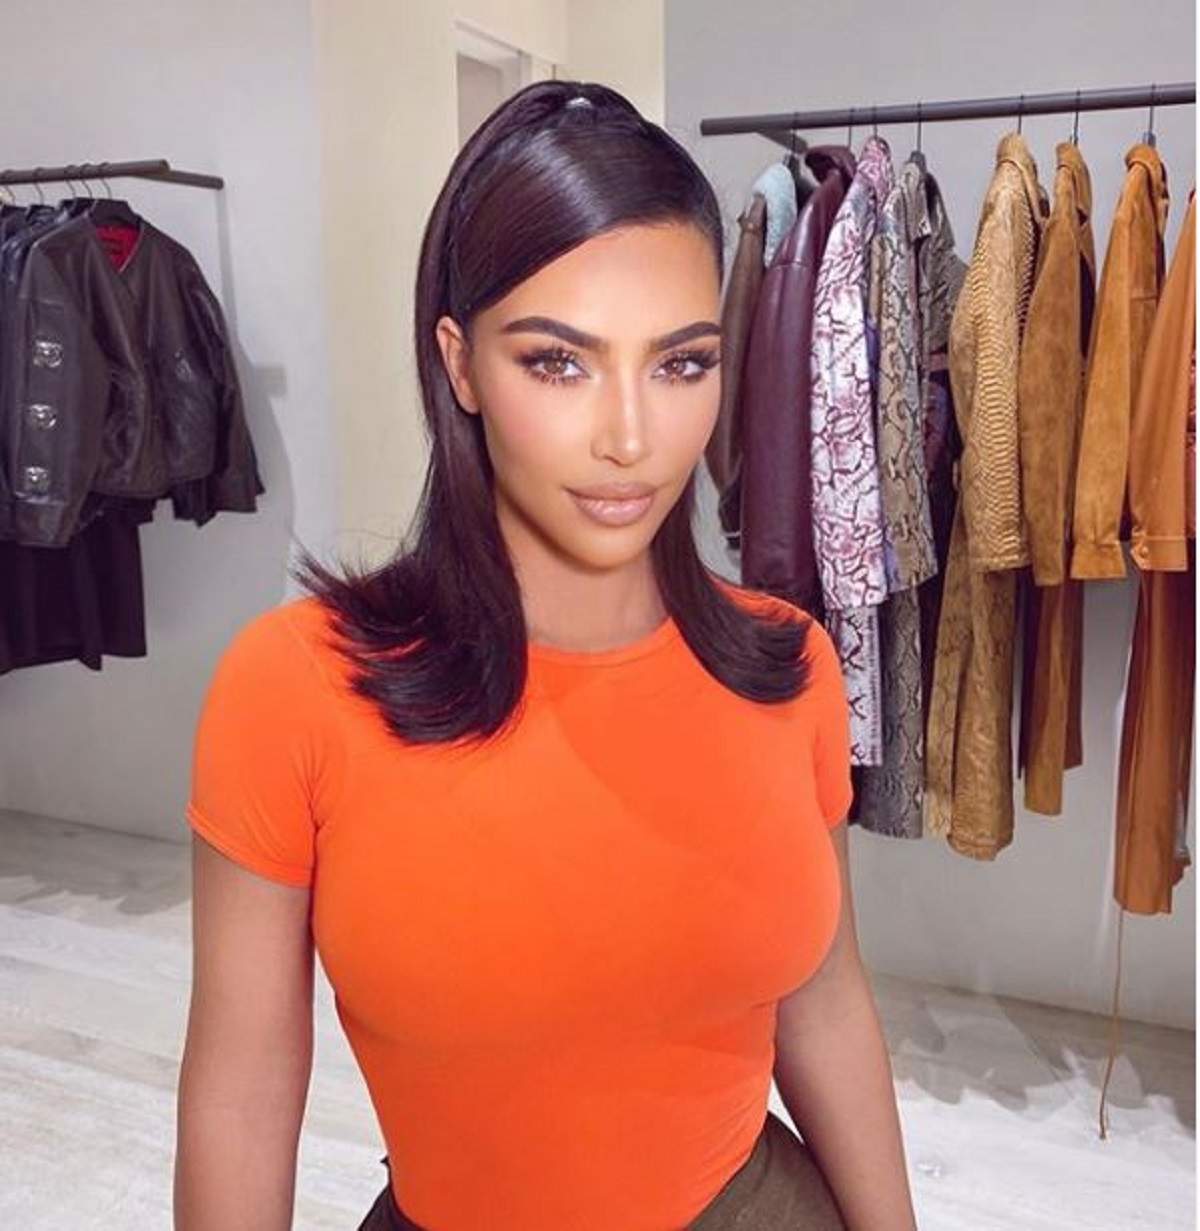 Kim Kardashian este in dressingul ei, poarta un tricou portocaliu si parul prins